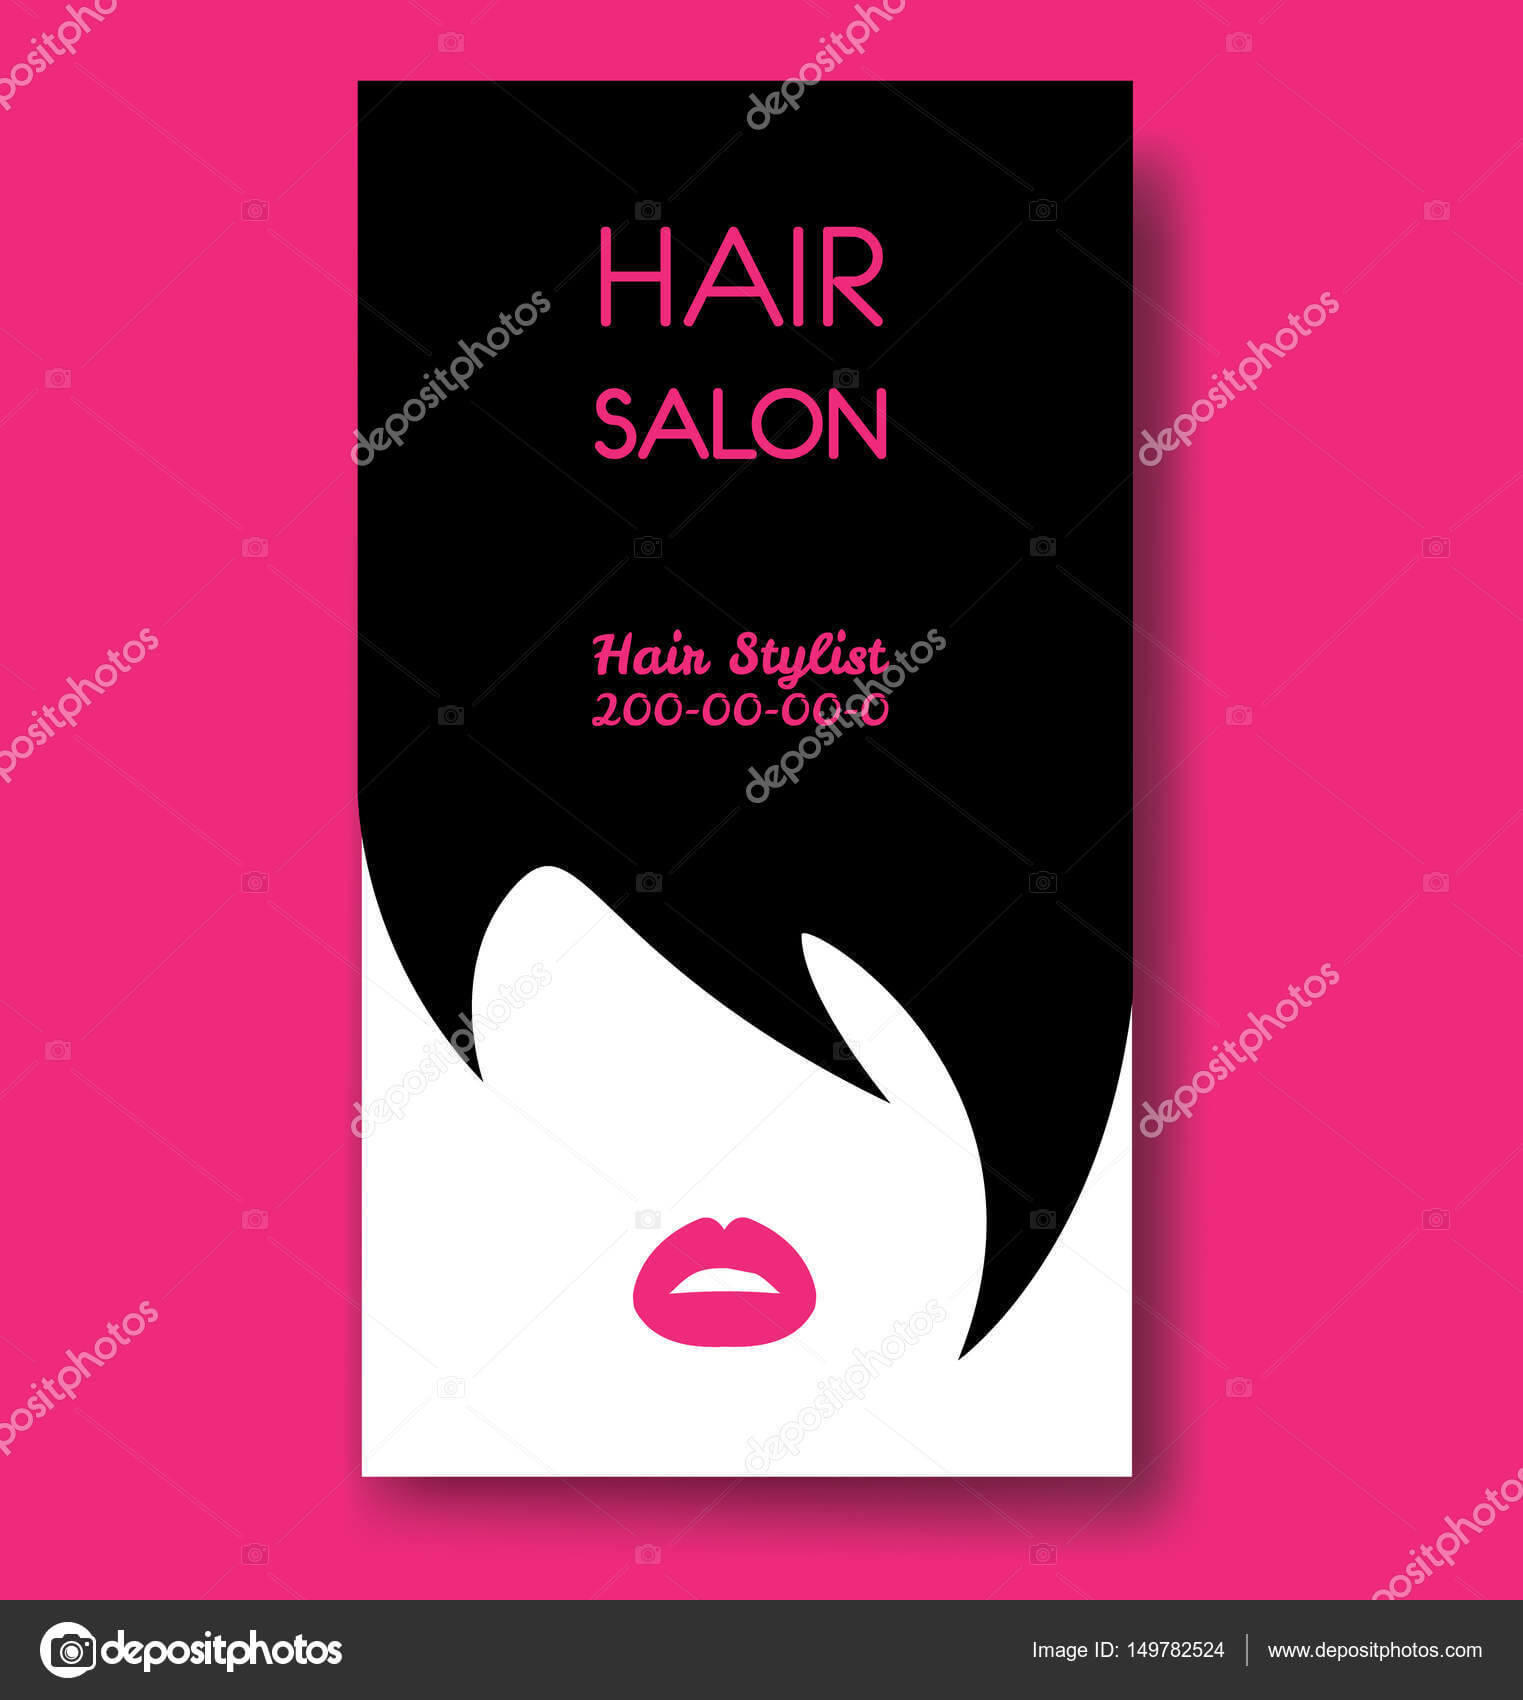 Hair Stylist Business Cards Examples | Hair Salon Business Throughout Hair Salon Business Card Template